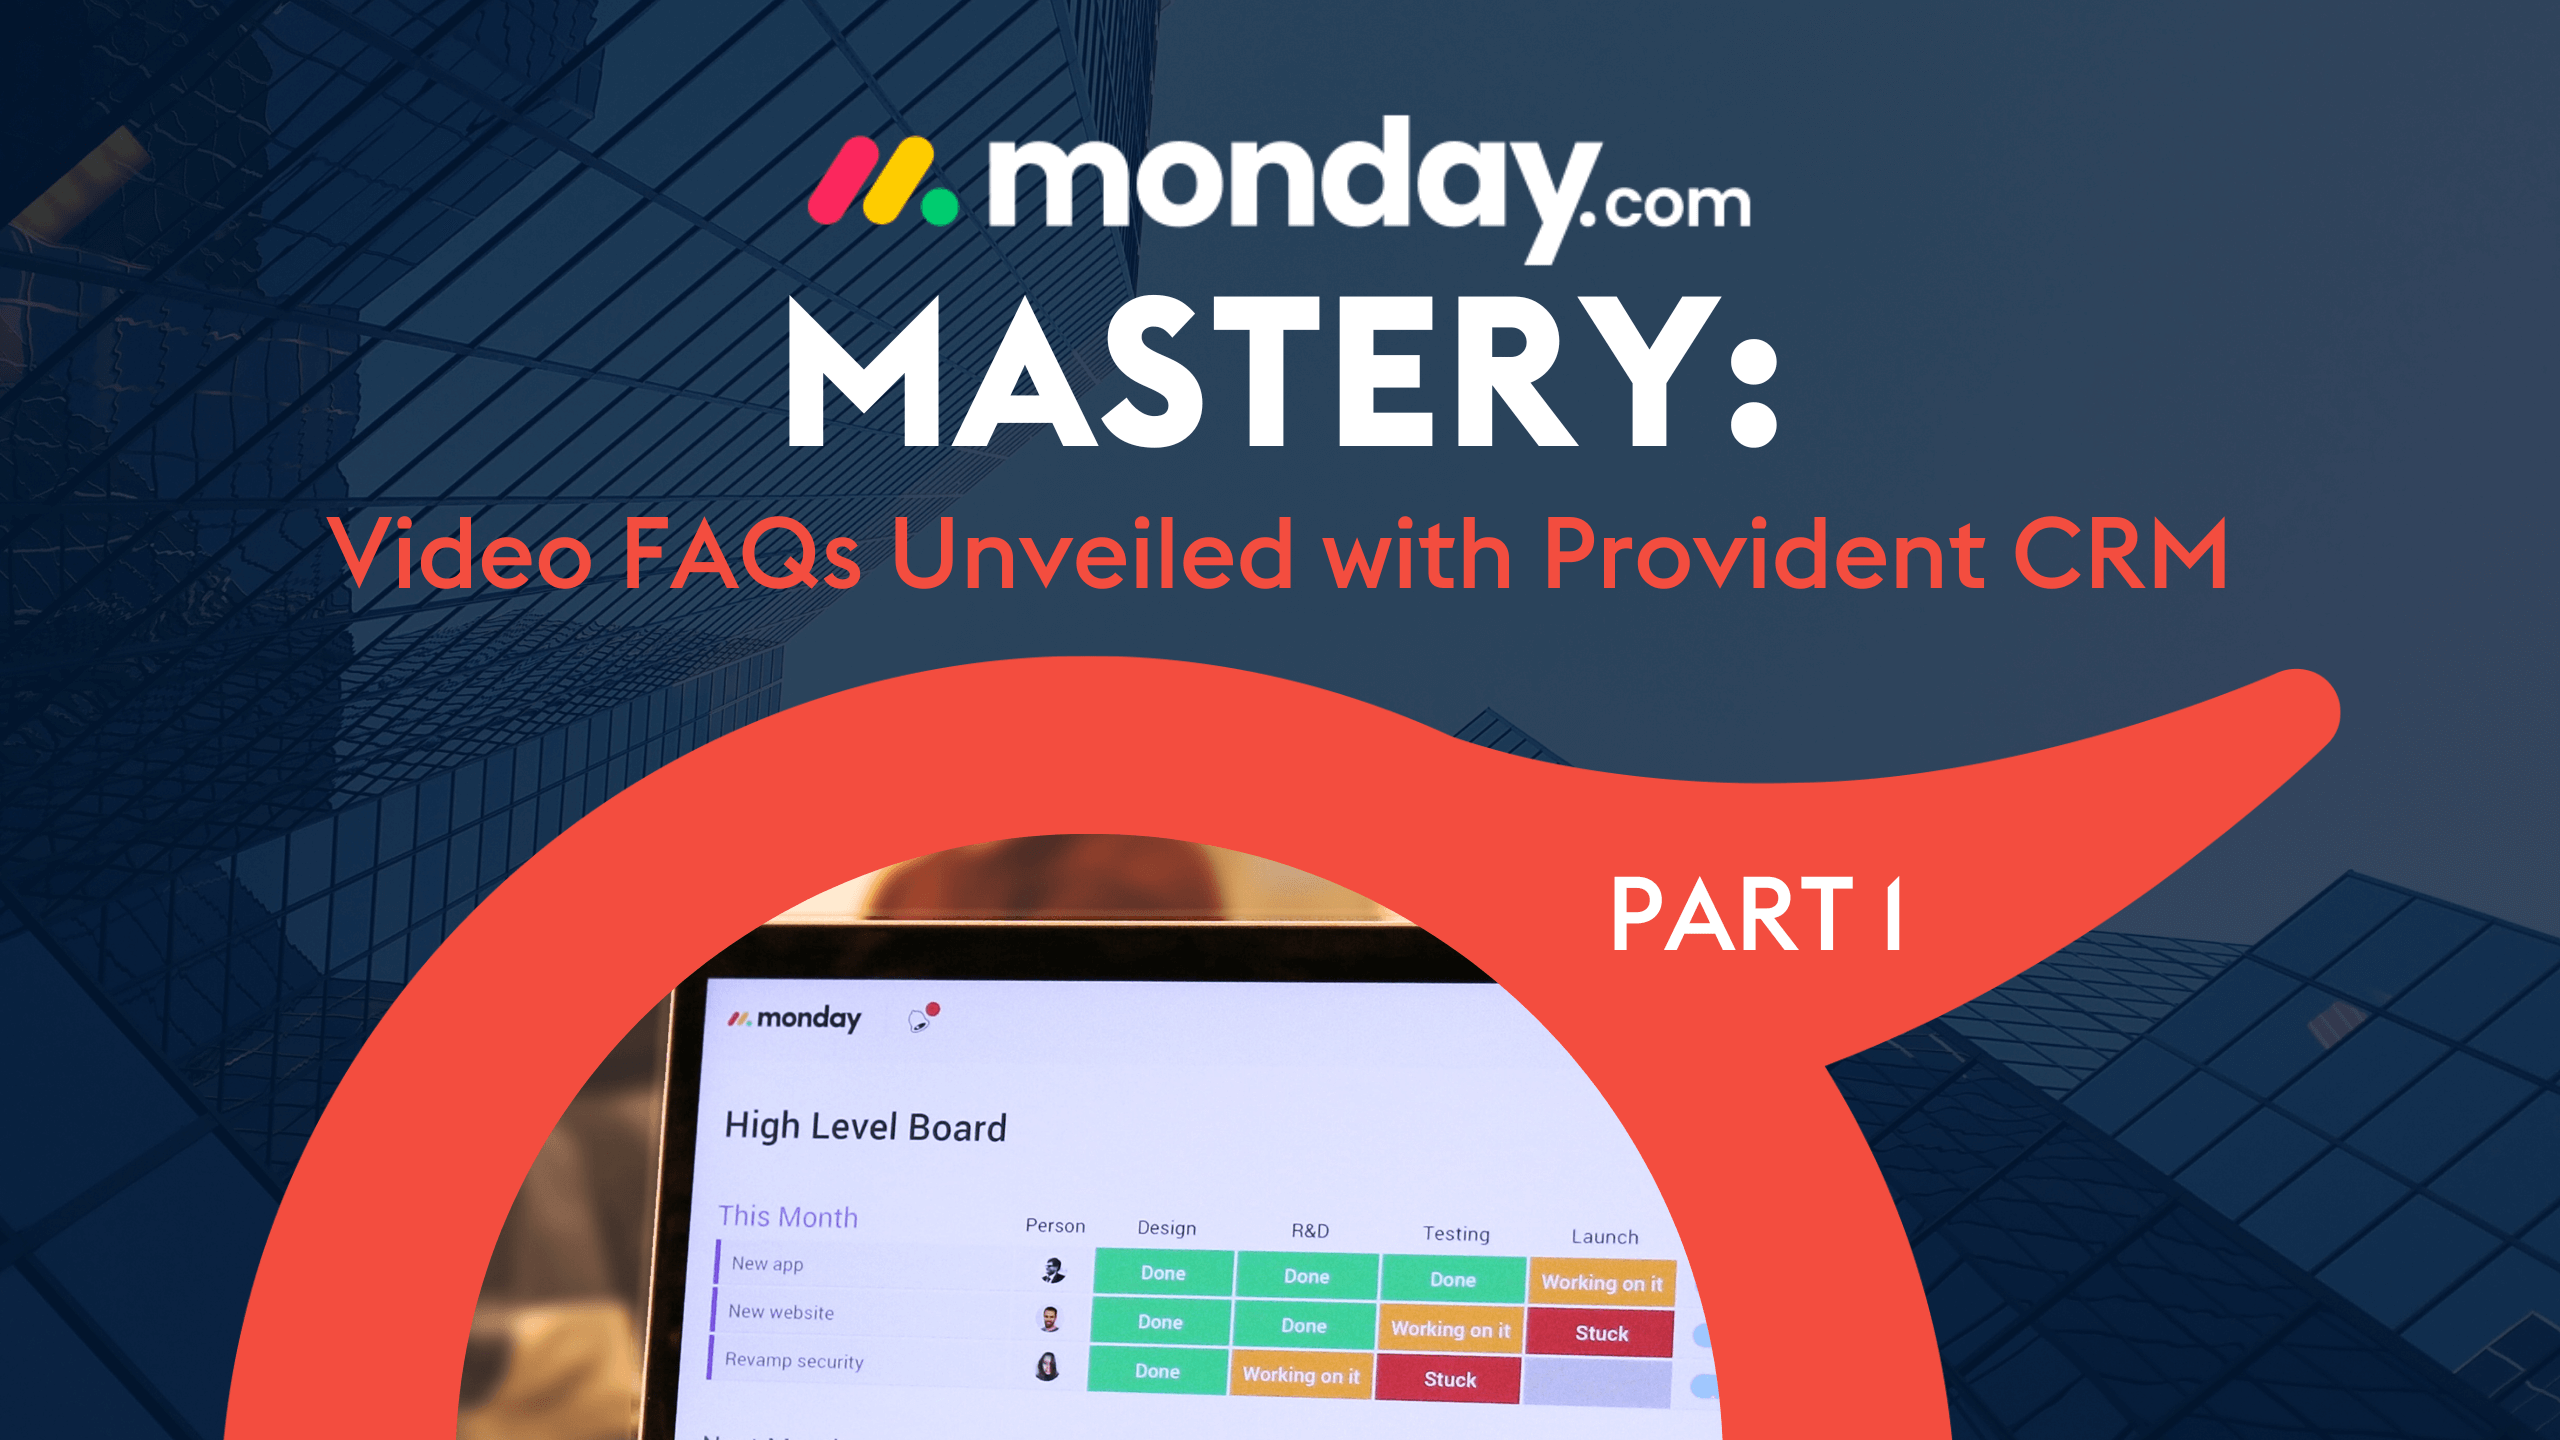 ProvidentCRM-CRM-monday-com-Mastery-Video-FAQs-Unveiled-Part 1